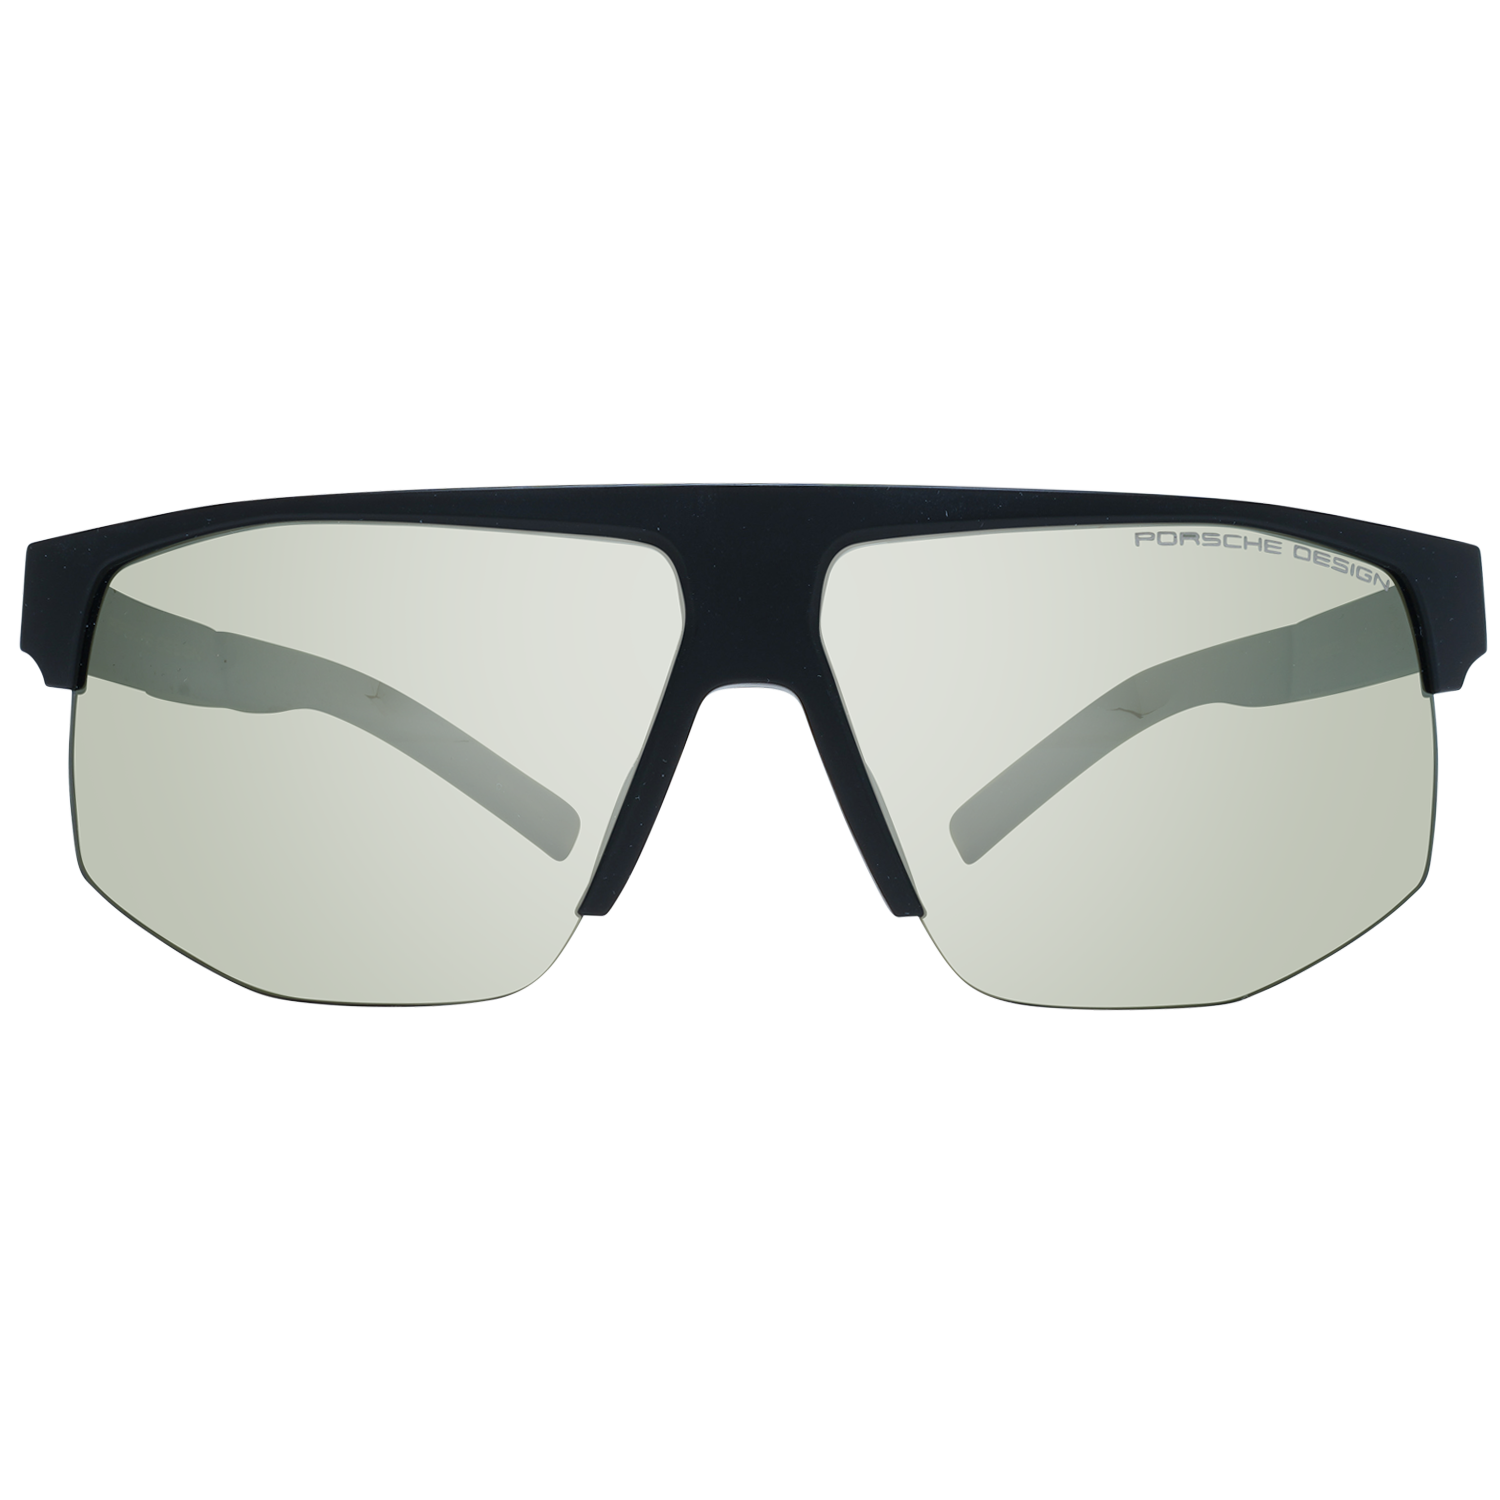 Porsche Design Sunglasses Porsche Design Sunglasses P8915 A 69 Eyeglasses Eyewear UK USA Australia 